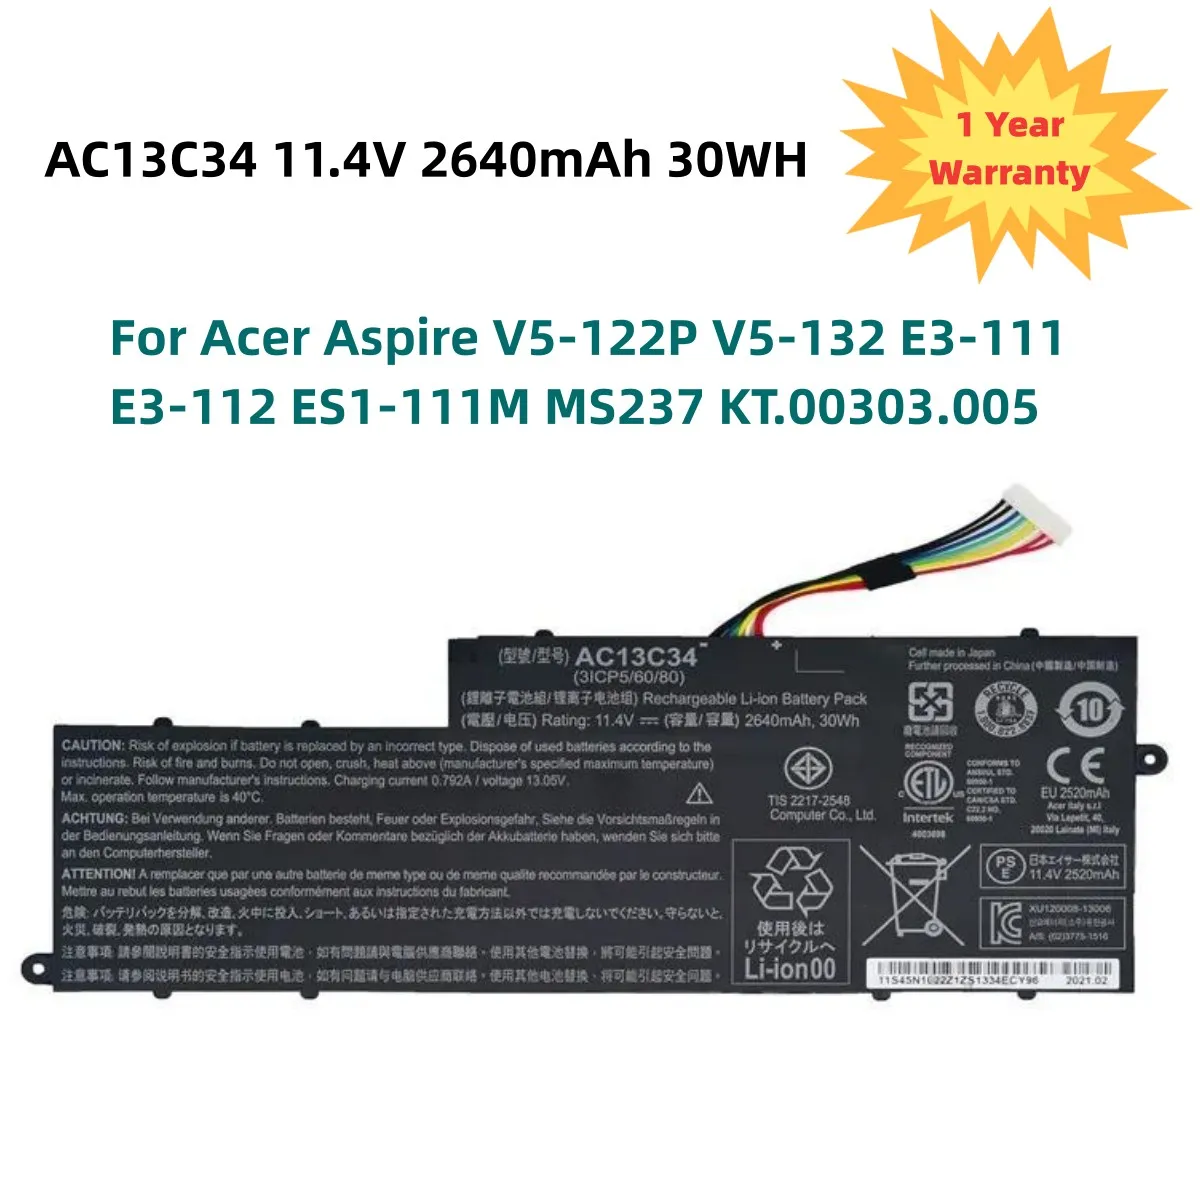 

AC13C34 Laptop Battery For Acer Aspire V5-122P V5-132 E3-111 E3-112 ES1-111M MS237 KT.00303.005 11.4V 30WH/2640mAh